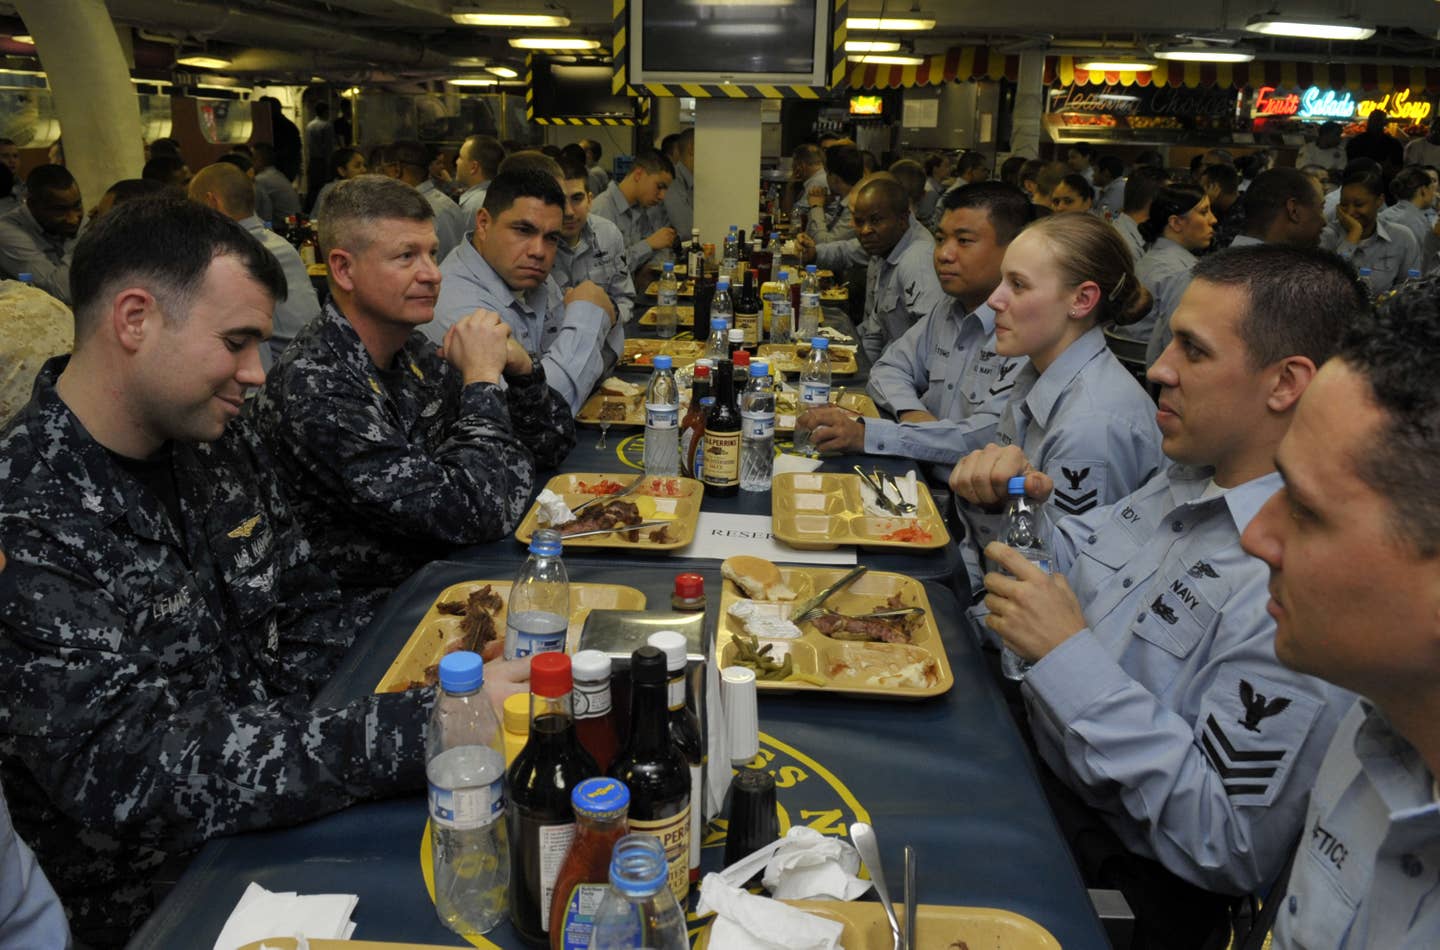 (U.S. Navy photo by Mass Communication Specialist 1st Class Tiffini Jones Vanderwyst)